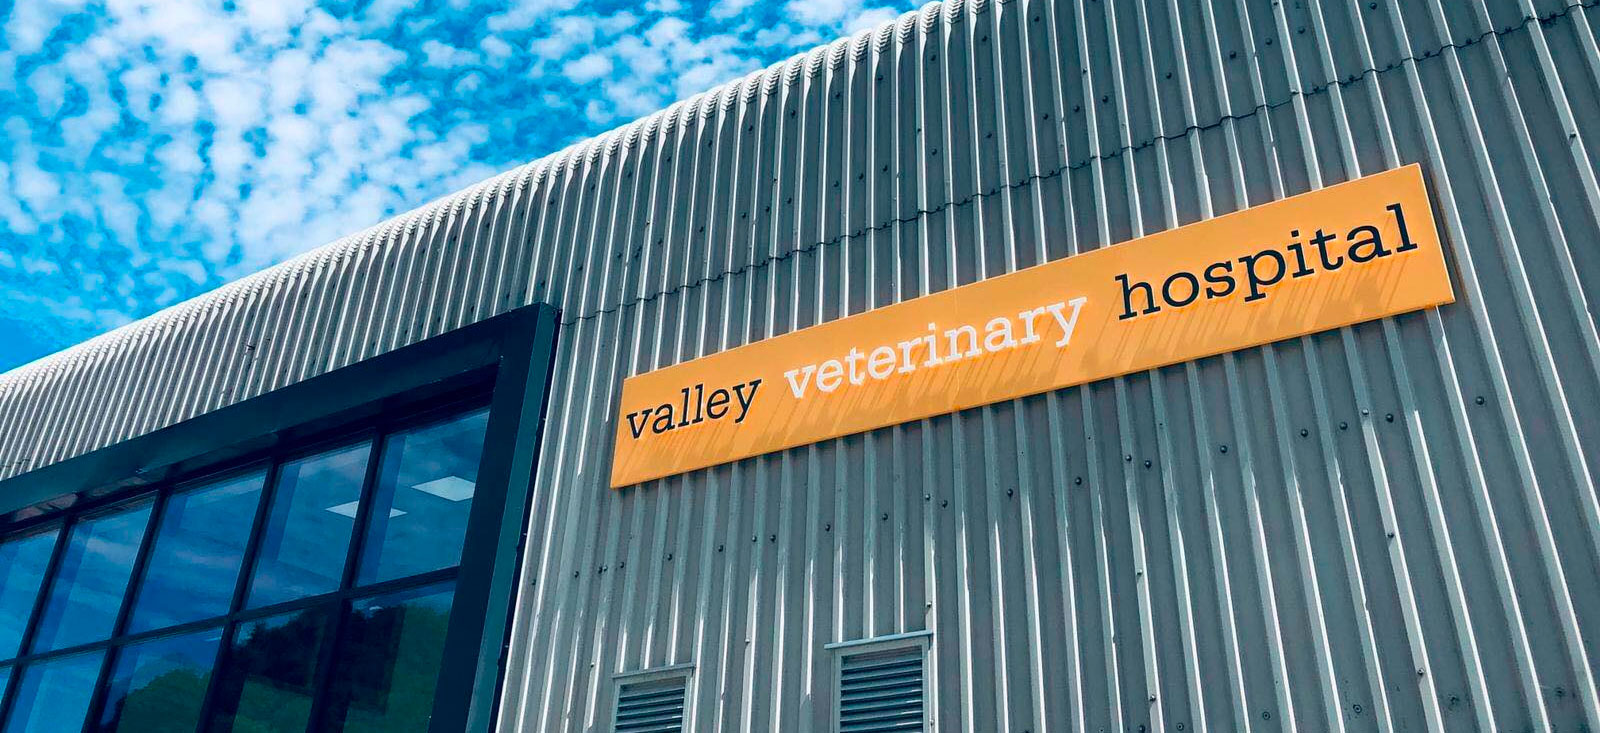 Valley Veterinary Hospital, Cardiff